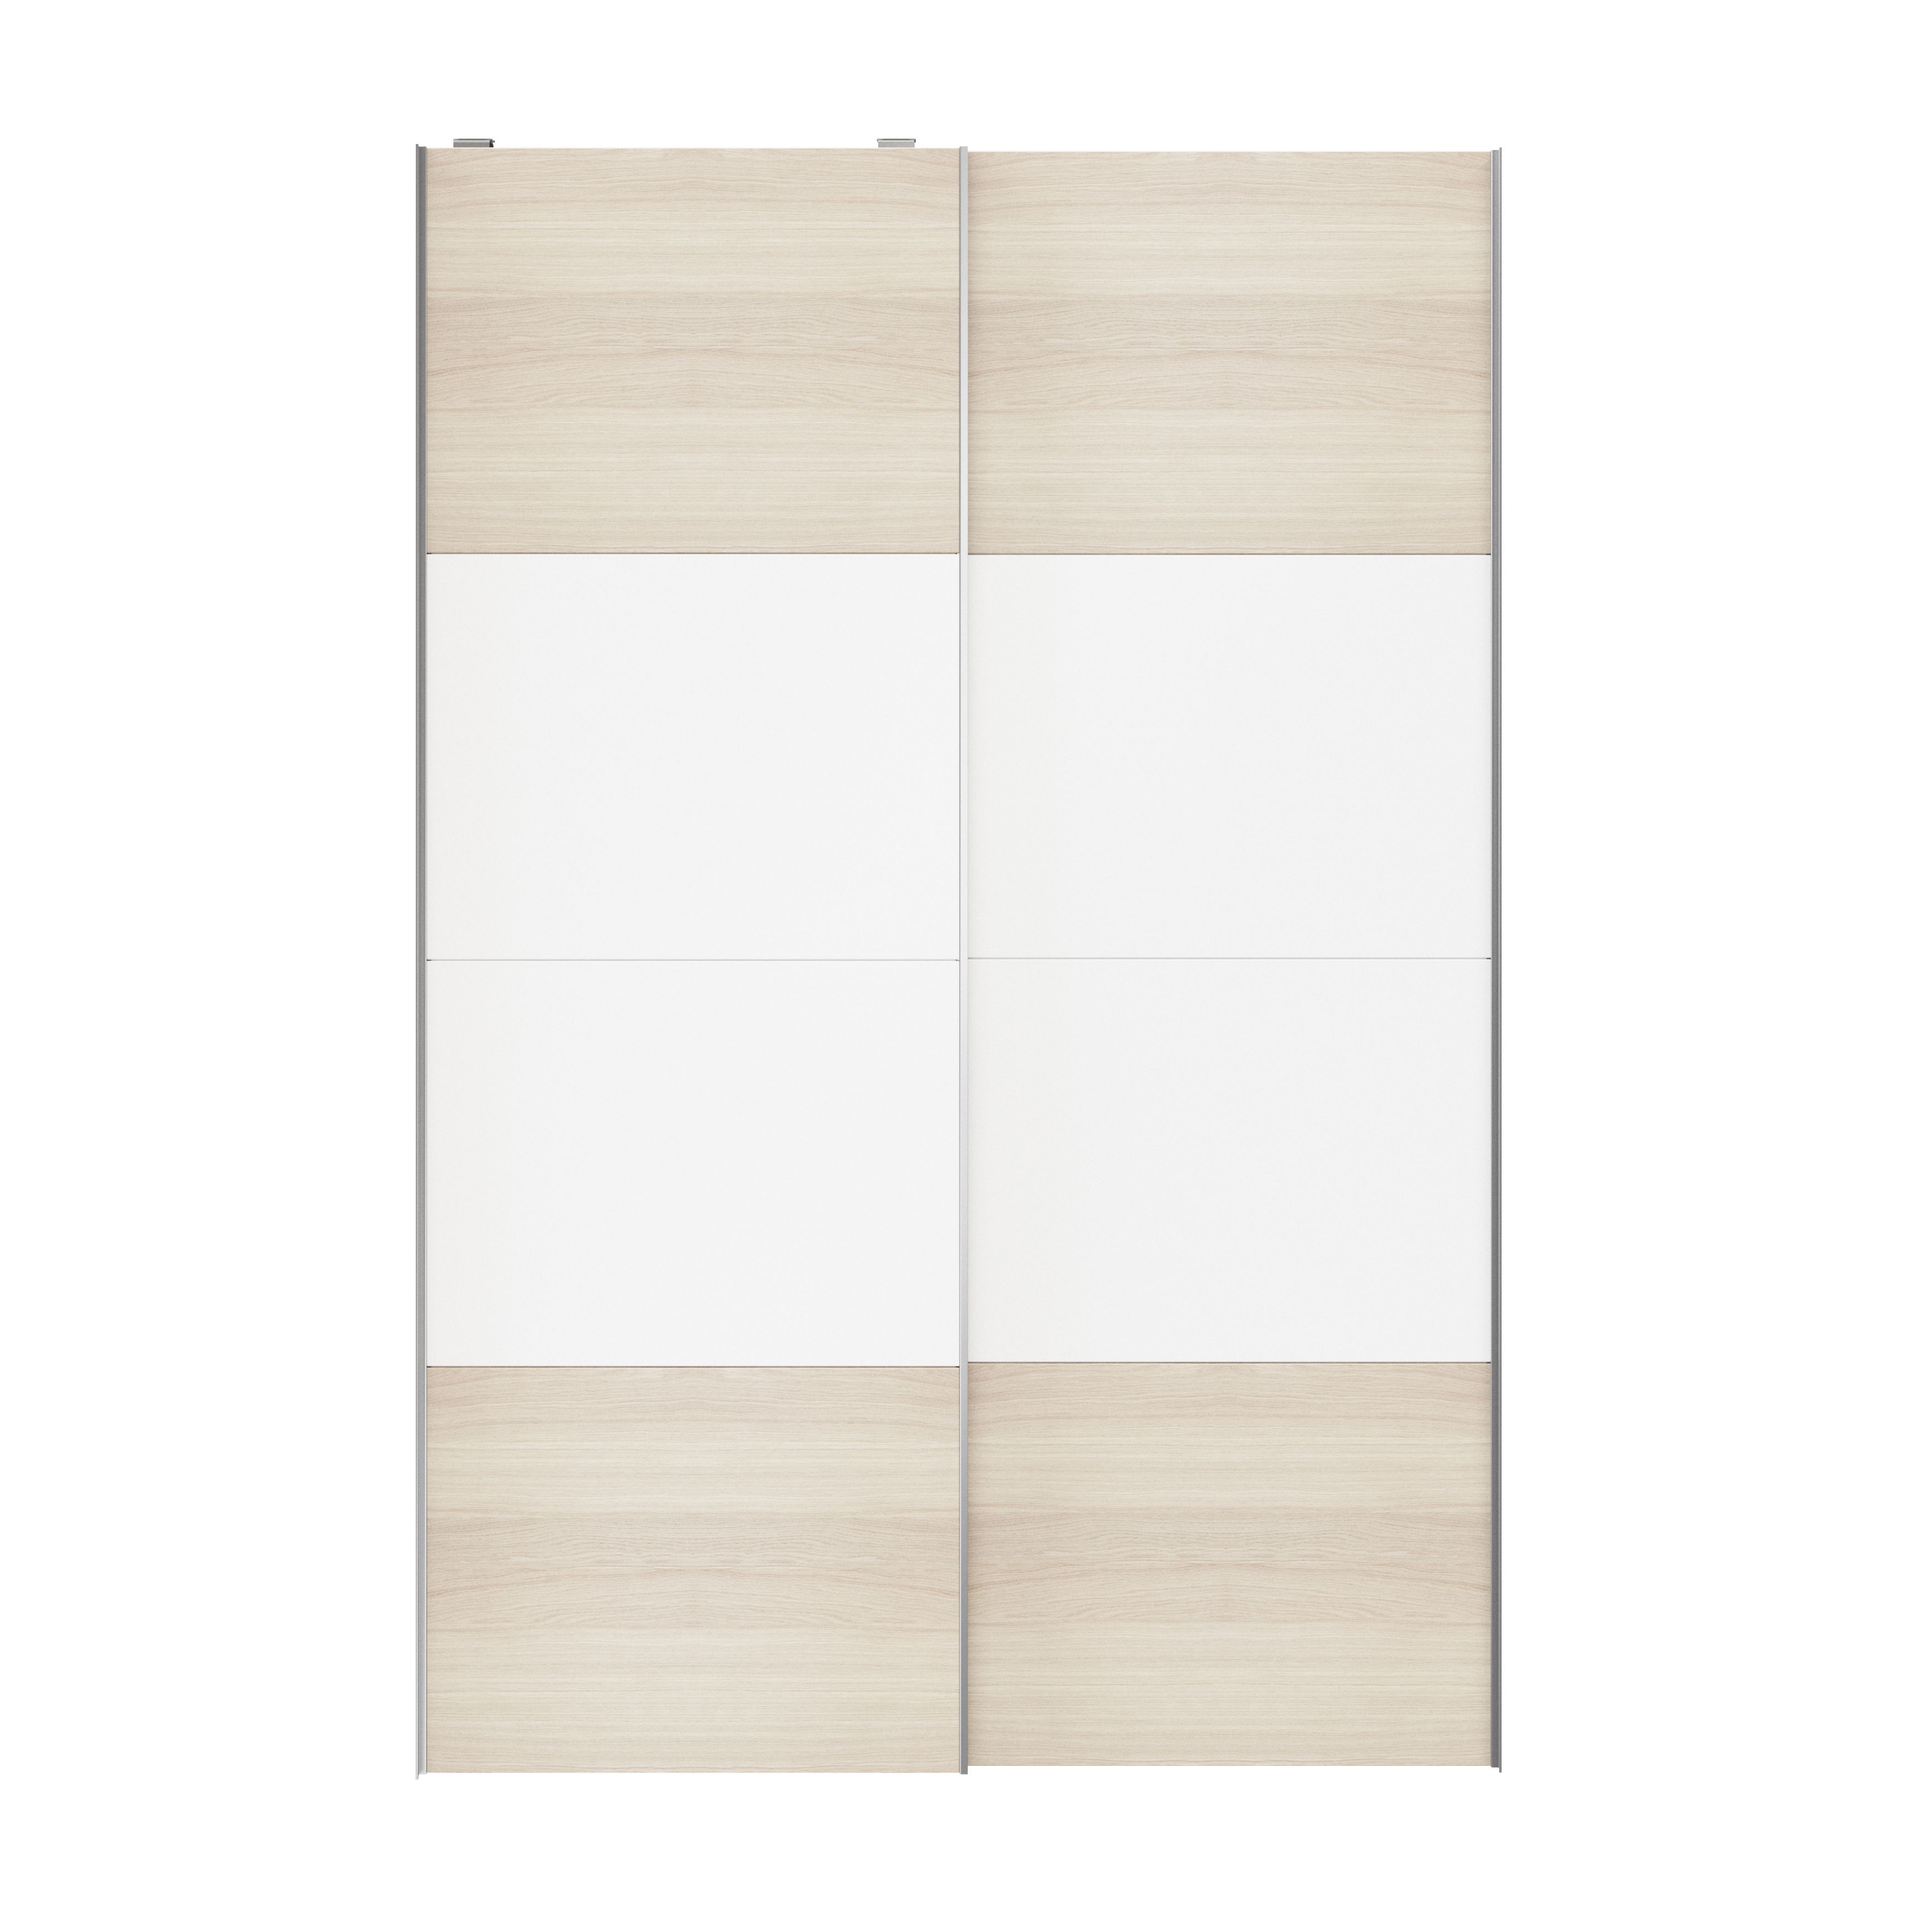 Atomia Panelled White oak effect 2 door Sliding Wardrobe Door kit (H)2250mm (W)1500mm